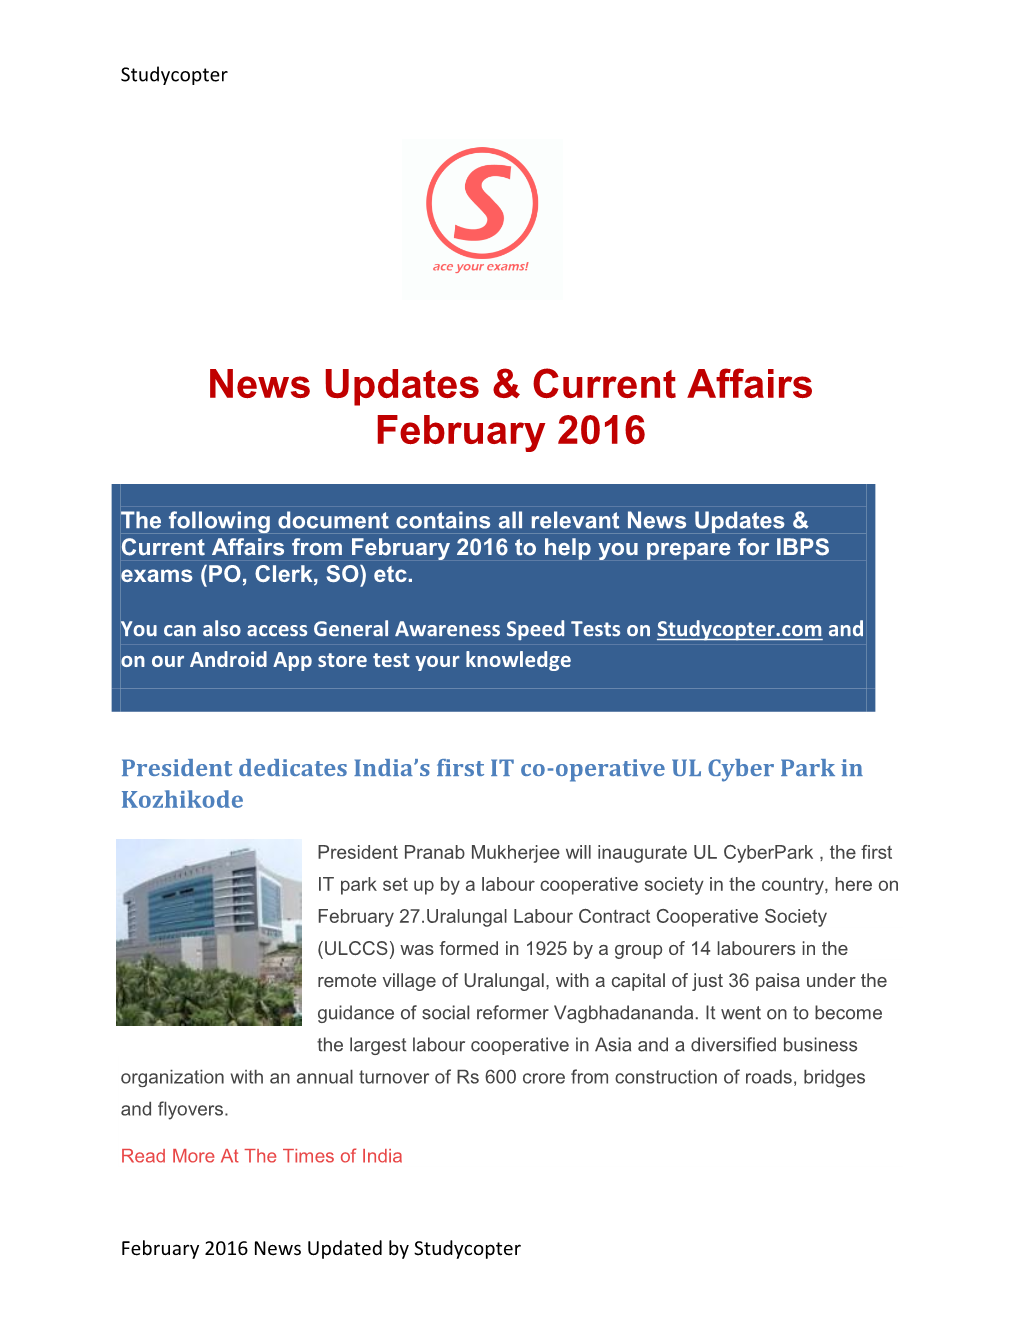 News Updates & Current Affairs February 2016